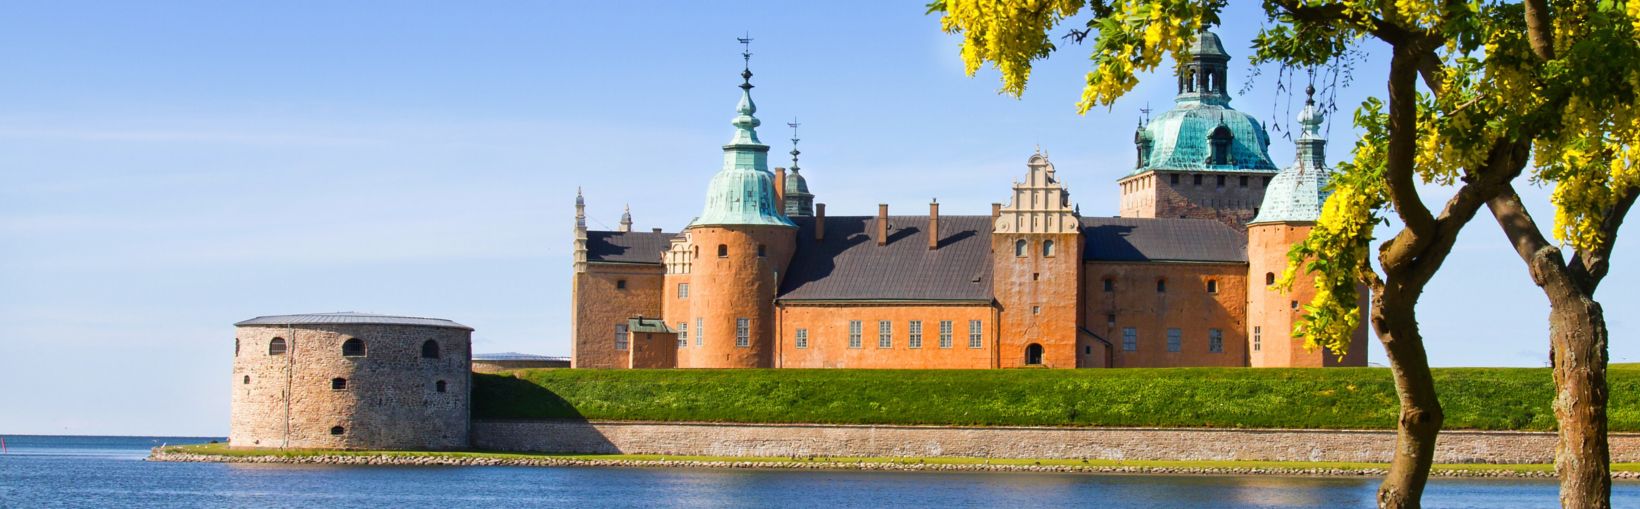 Château médiéval de Kalmar, Suède.